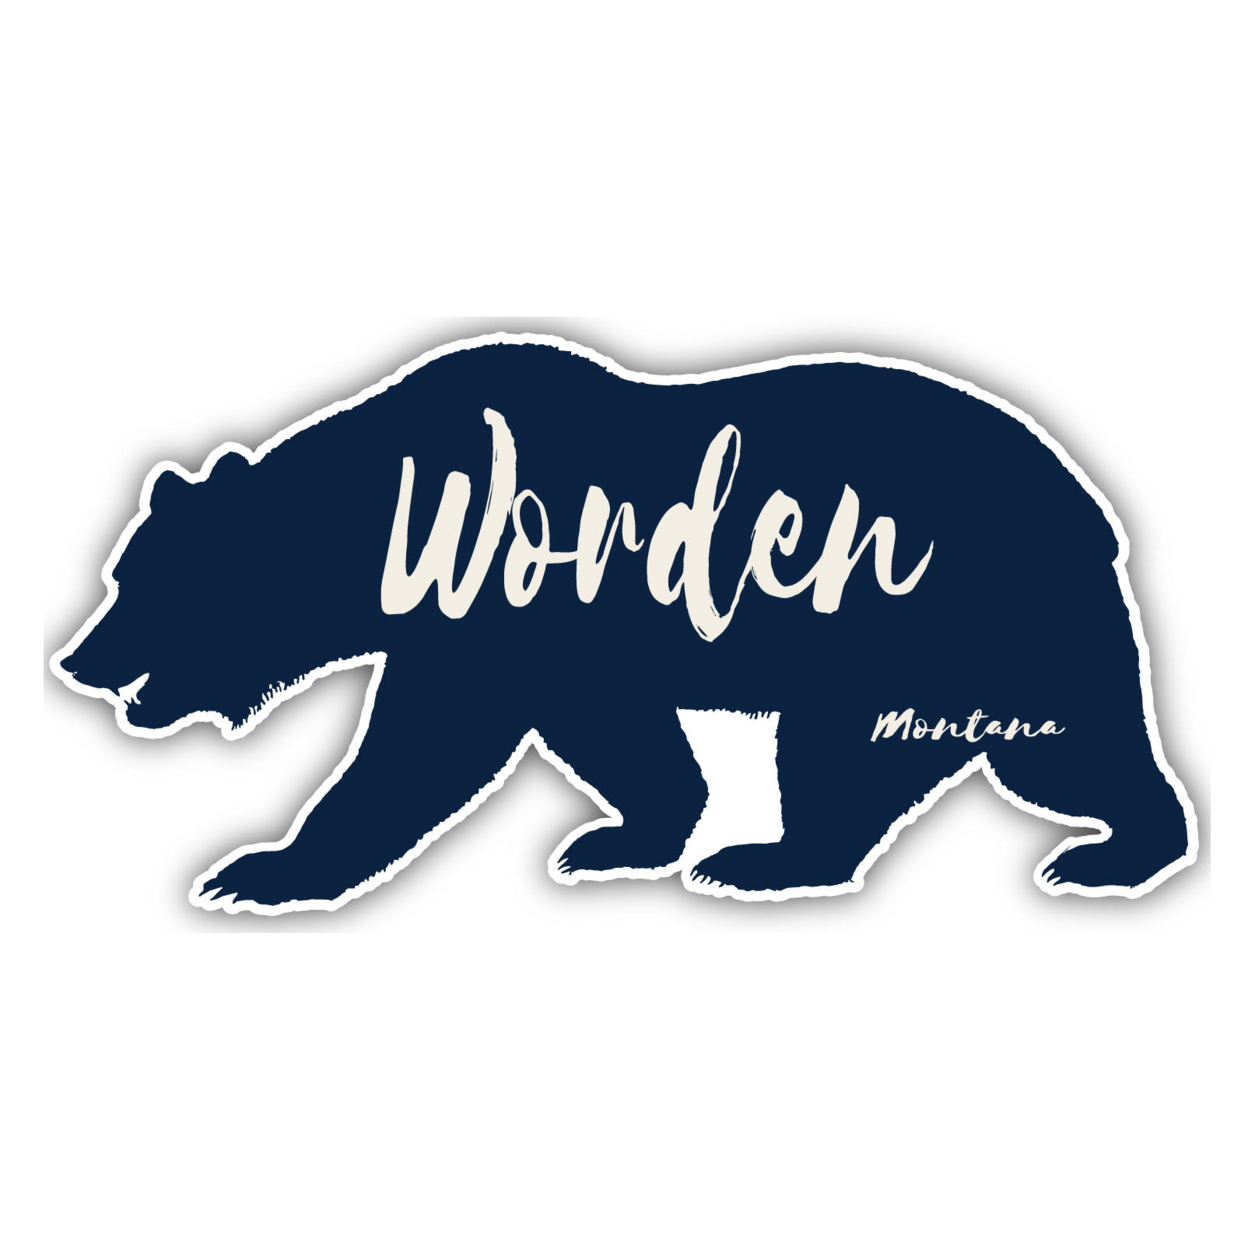 Worden Montana Souvenir Decorative Stickers (Choose Theme And Size) - Single Unit, 4-Inch, Bear